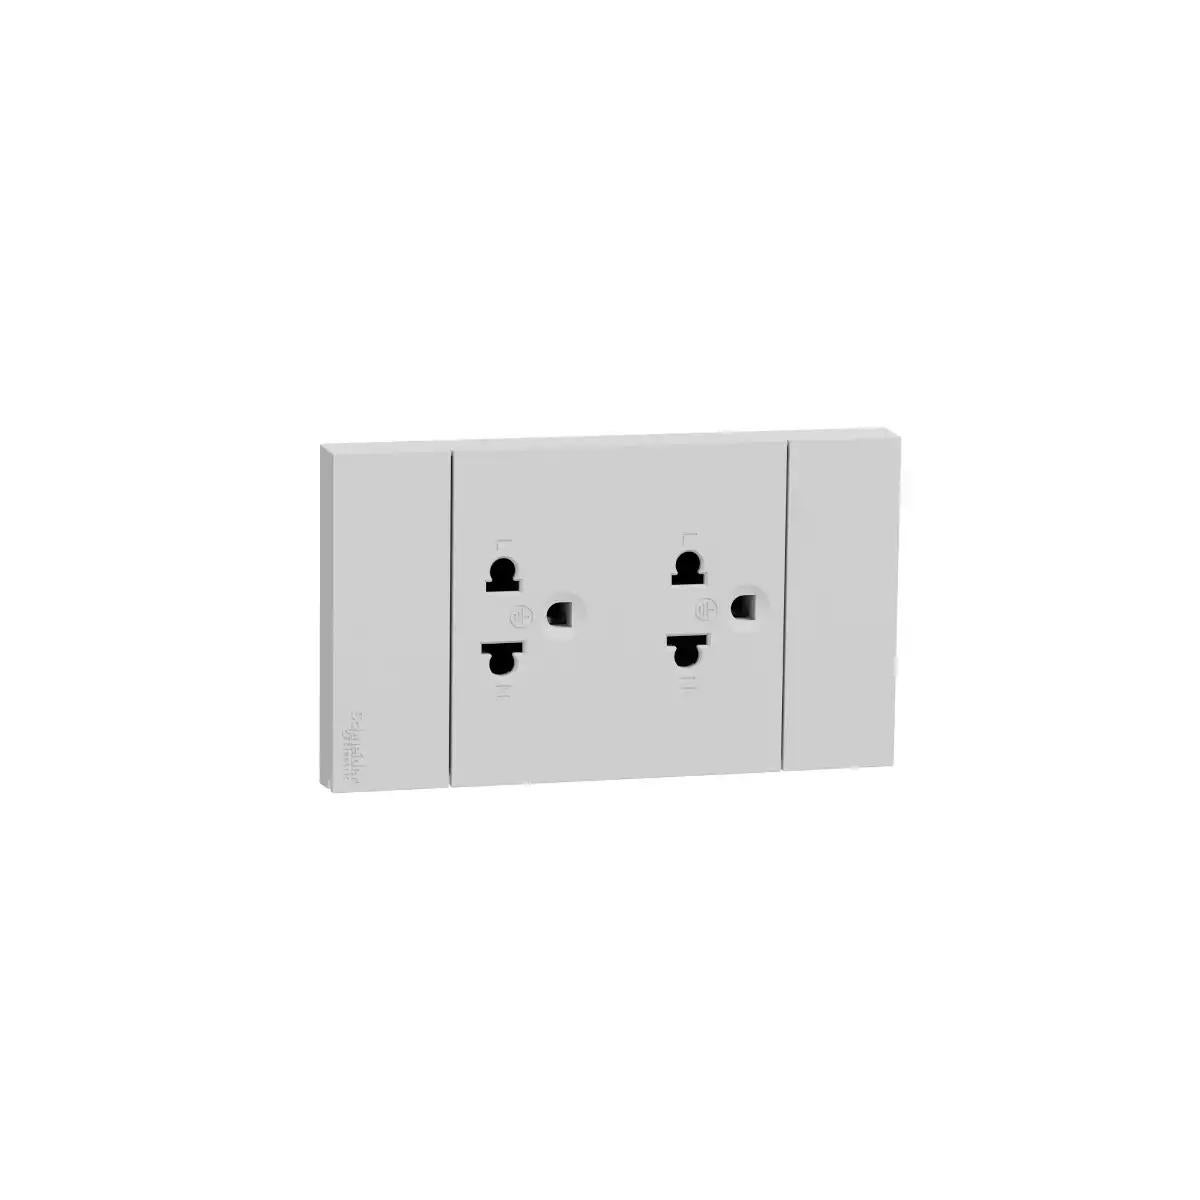 Socket-outlet, Avataron A, Universal, 16A, 250V, 2G, 3 Pin, Grey